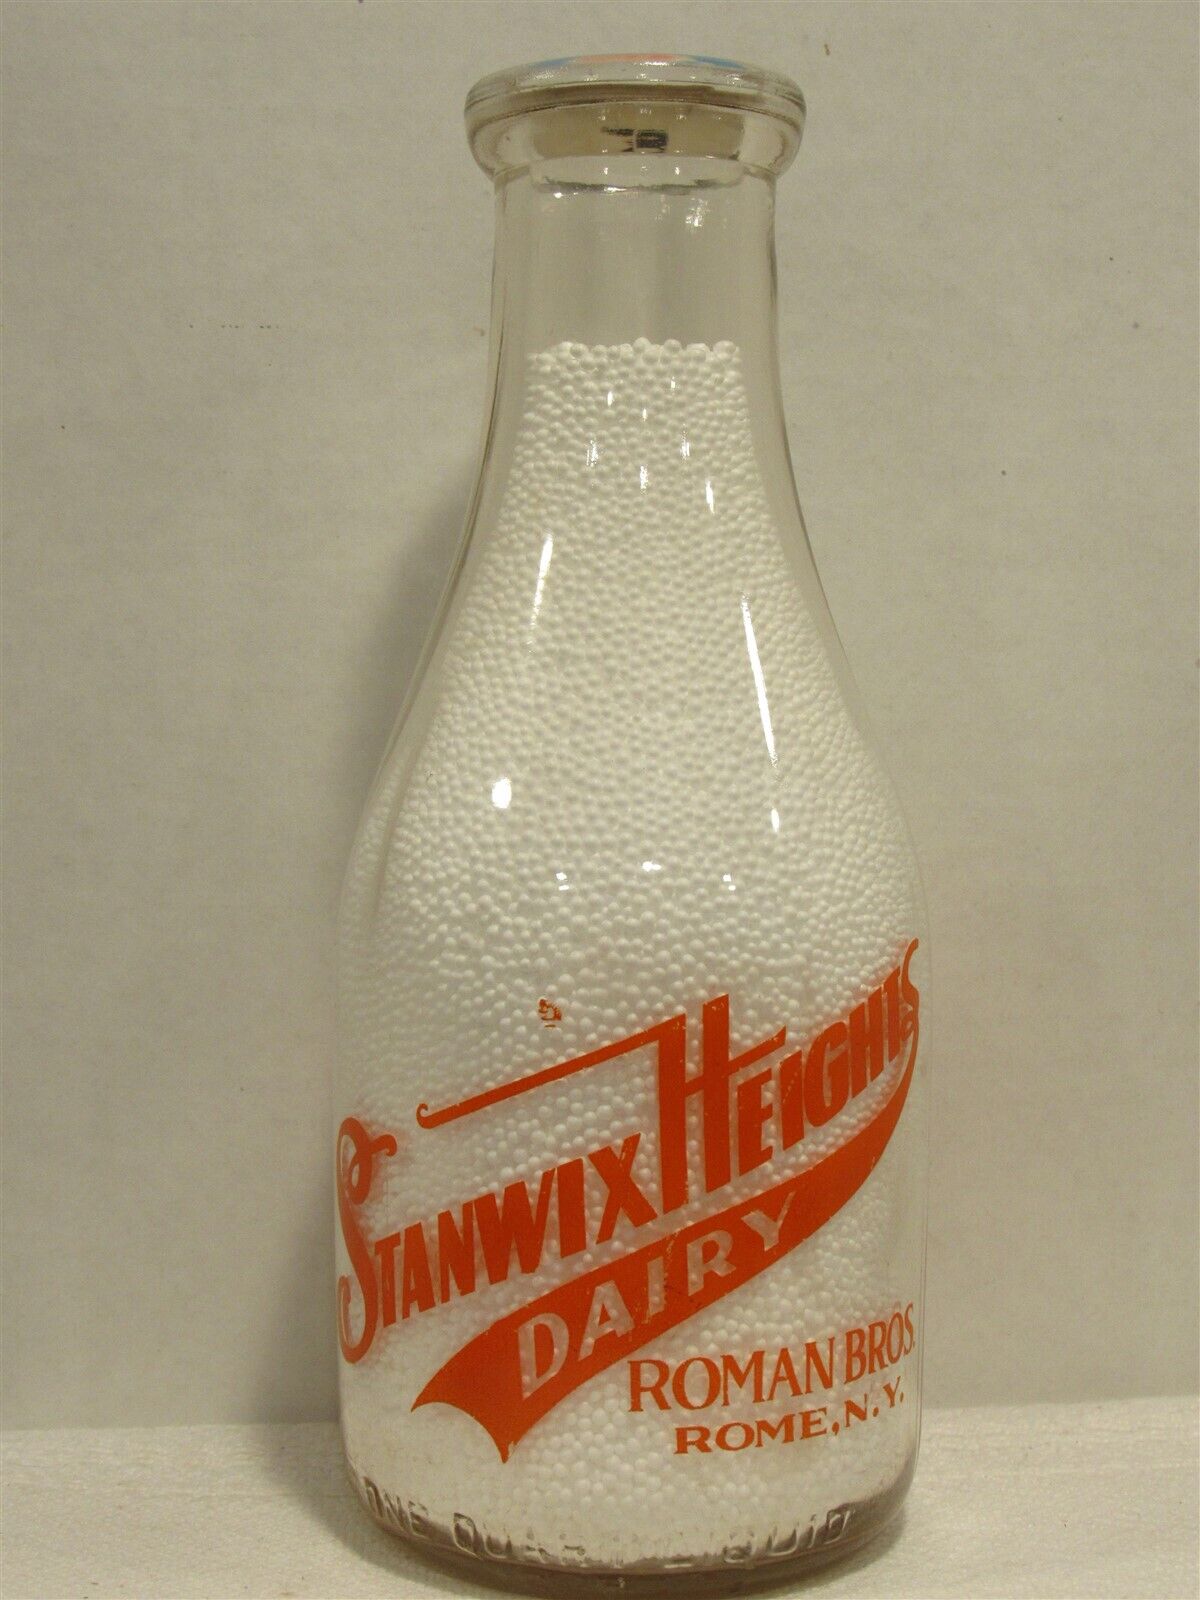 TRPQ Milk Bottle Stanwix Heights Dairy Roman Bros Rome NY ONEIDA COUNTY 1947